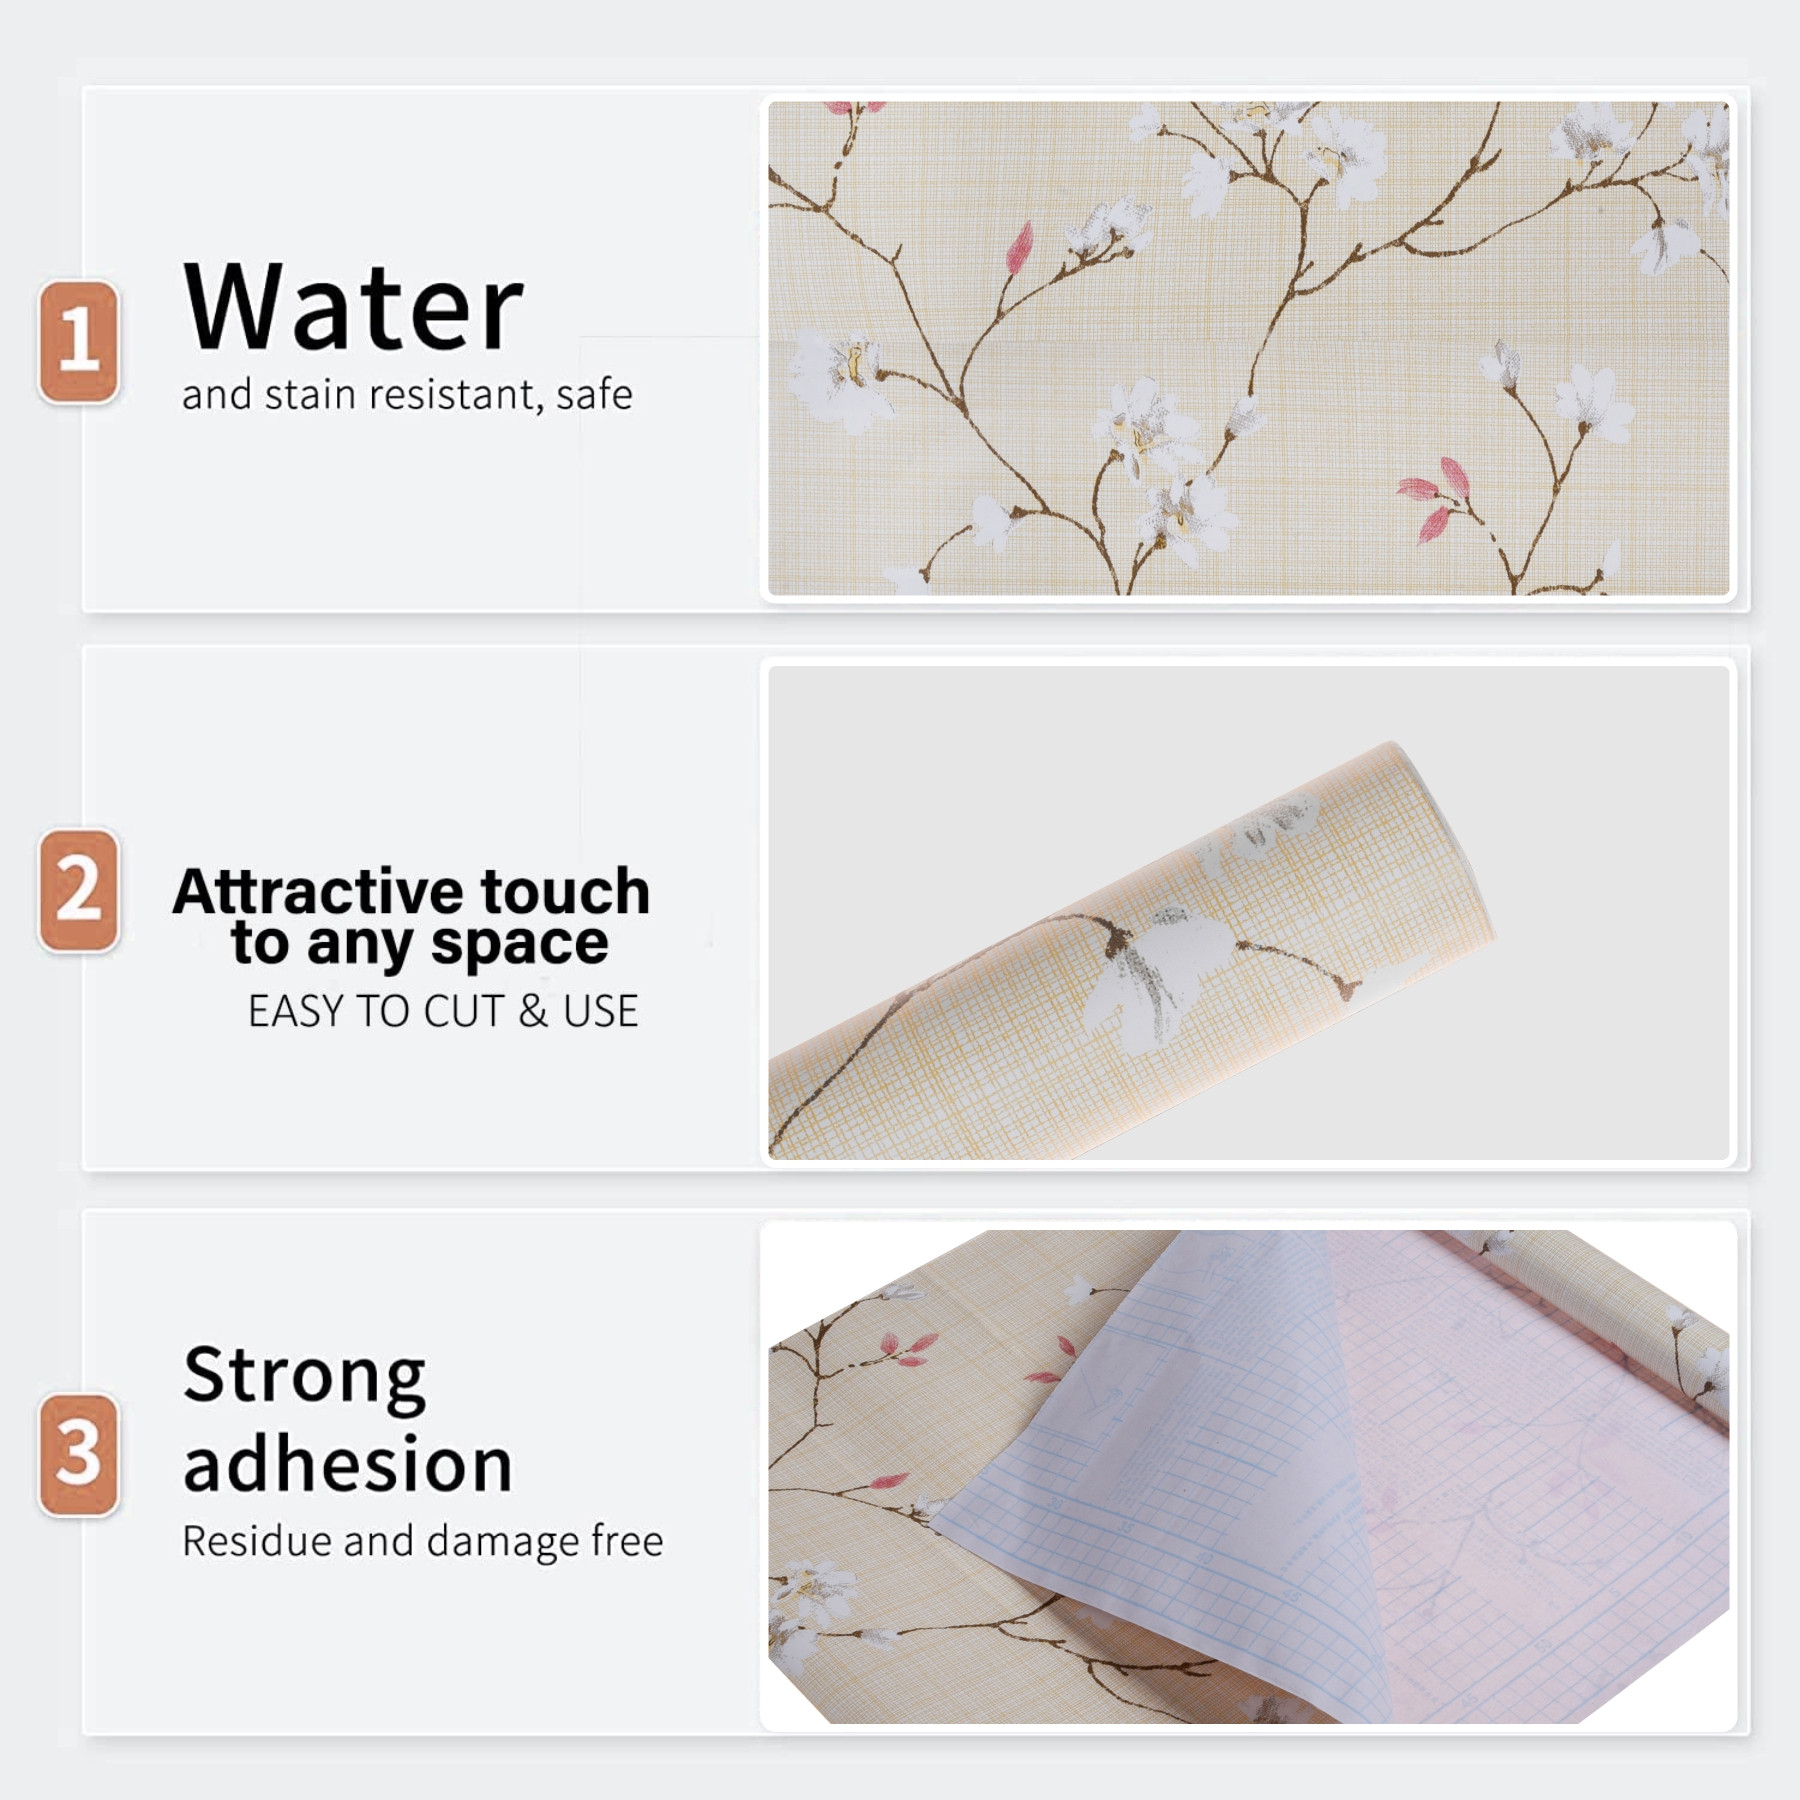 Kuber Industries Wallpaper | Self Adhesive Wallpaper Sheet | PVC Wallpaper Sheet for Home Décor | Kitchen Cabinets Wallpaper Roll | 5 Meter | WP-19 | Cream